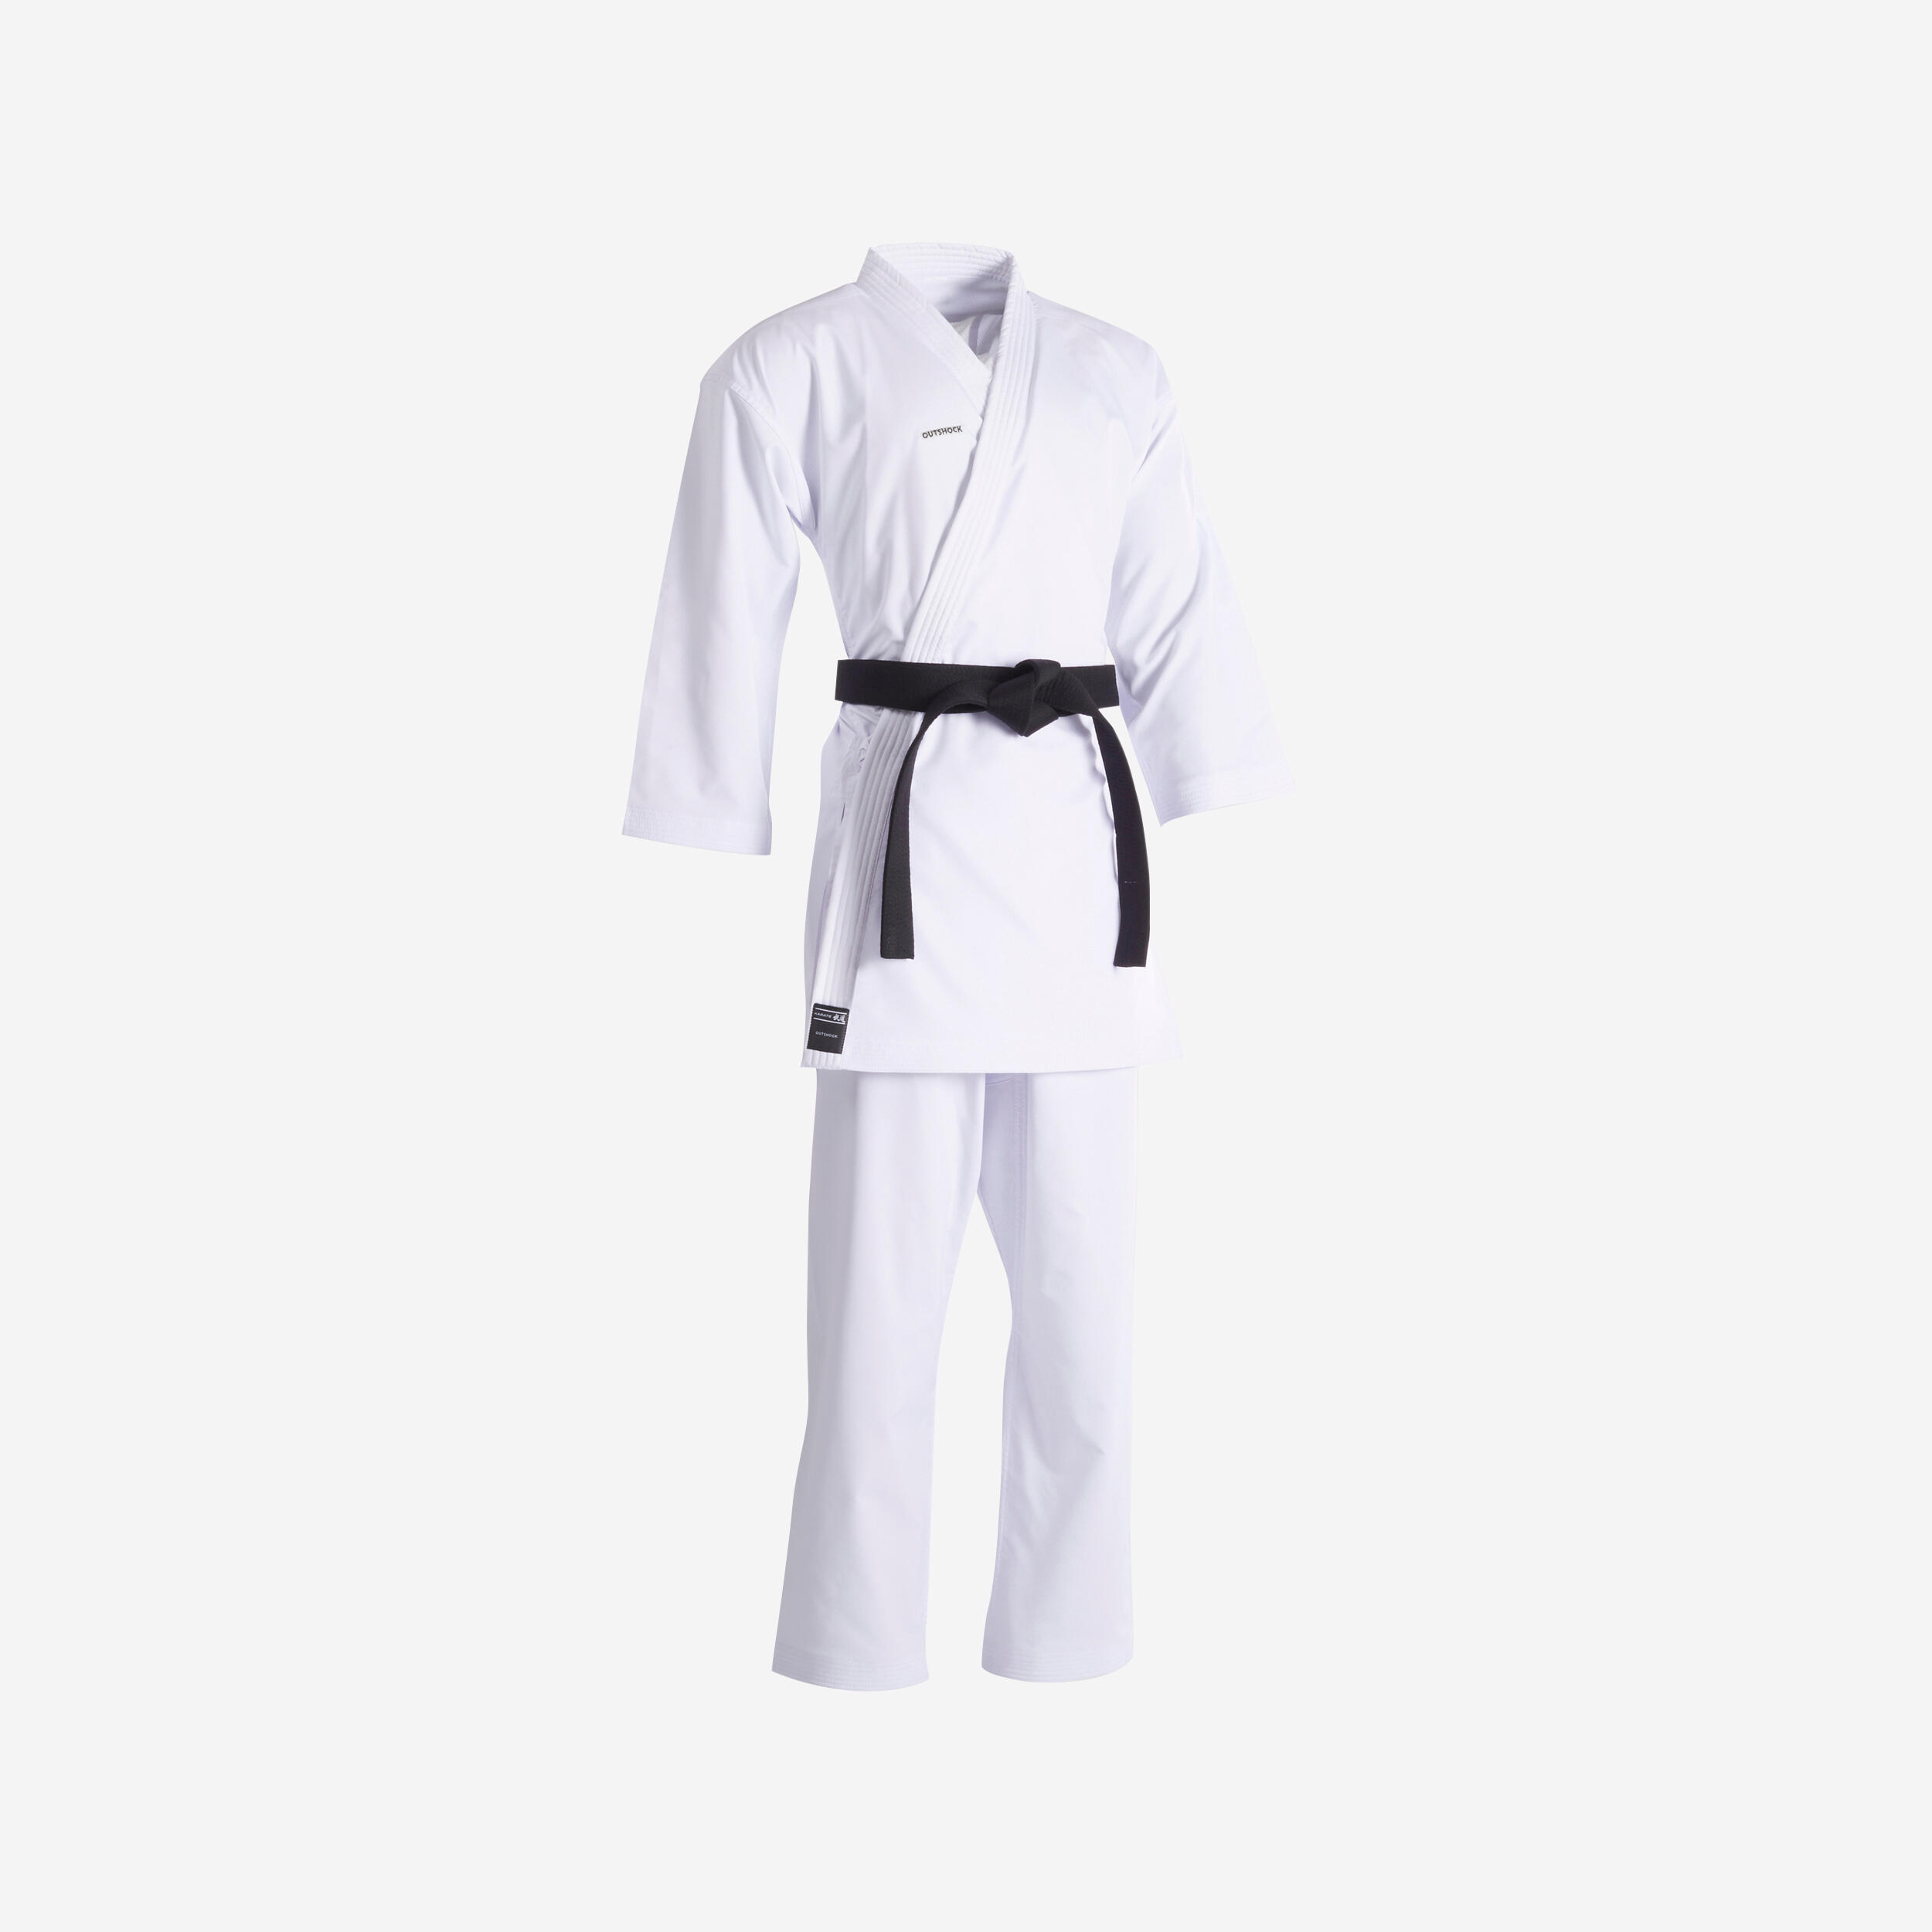 OUTSHOCK 900 Adult Kumite Karate Uniform